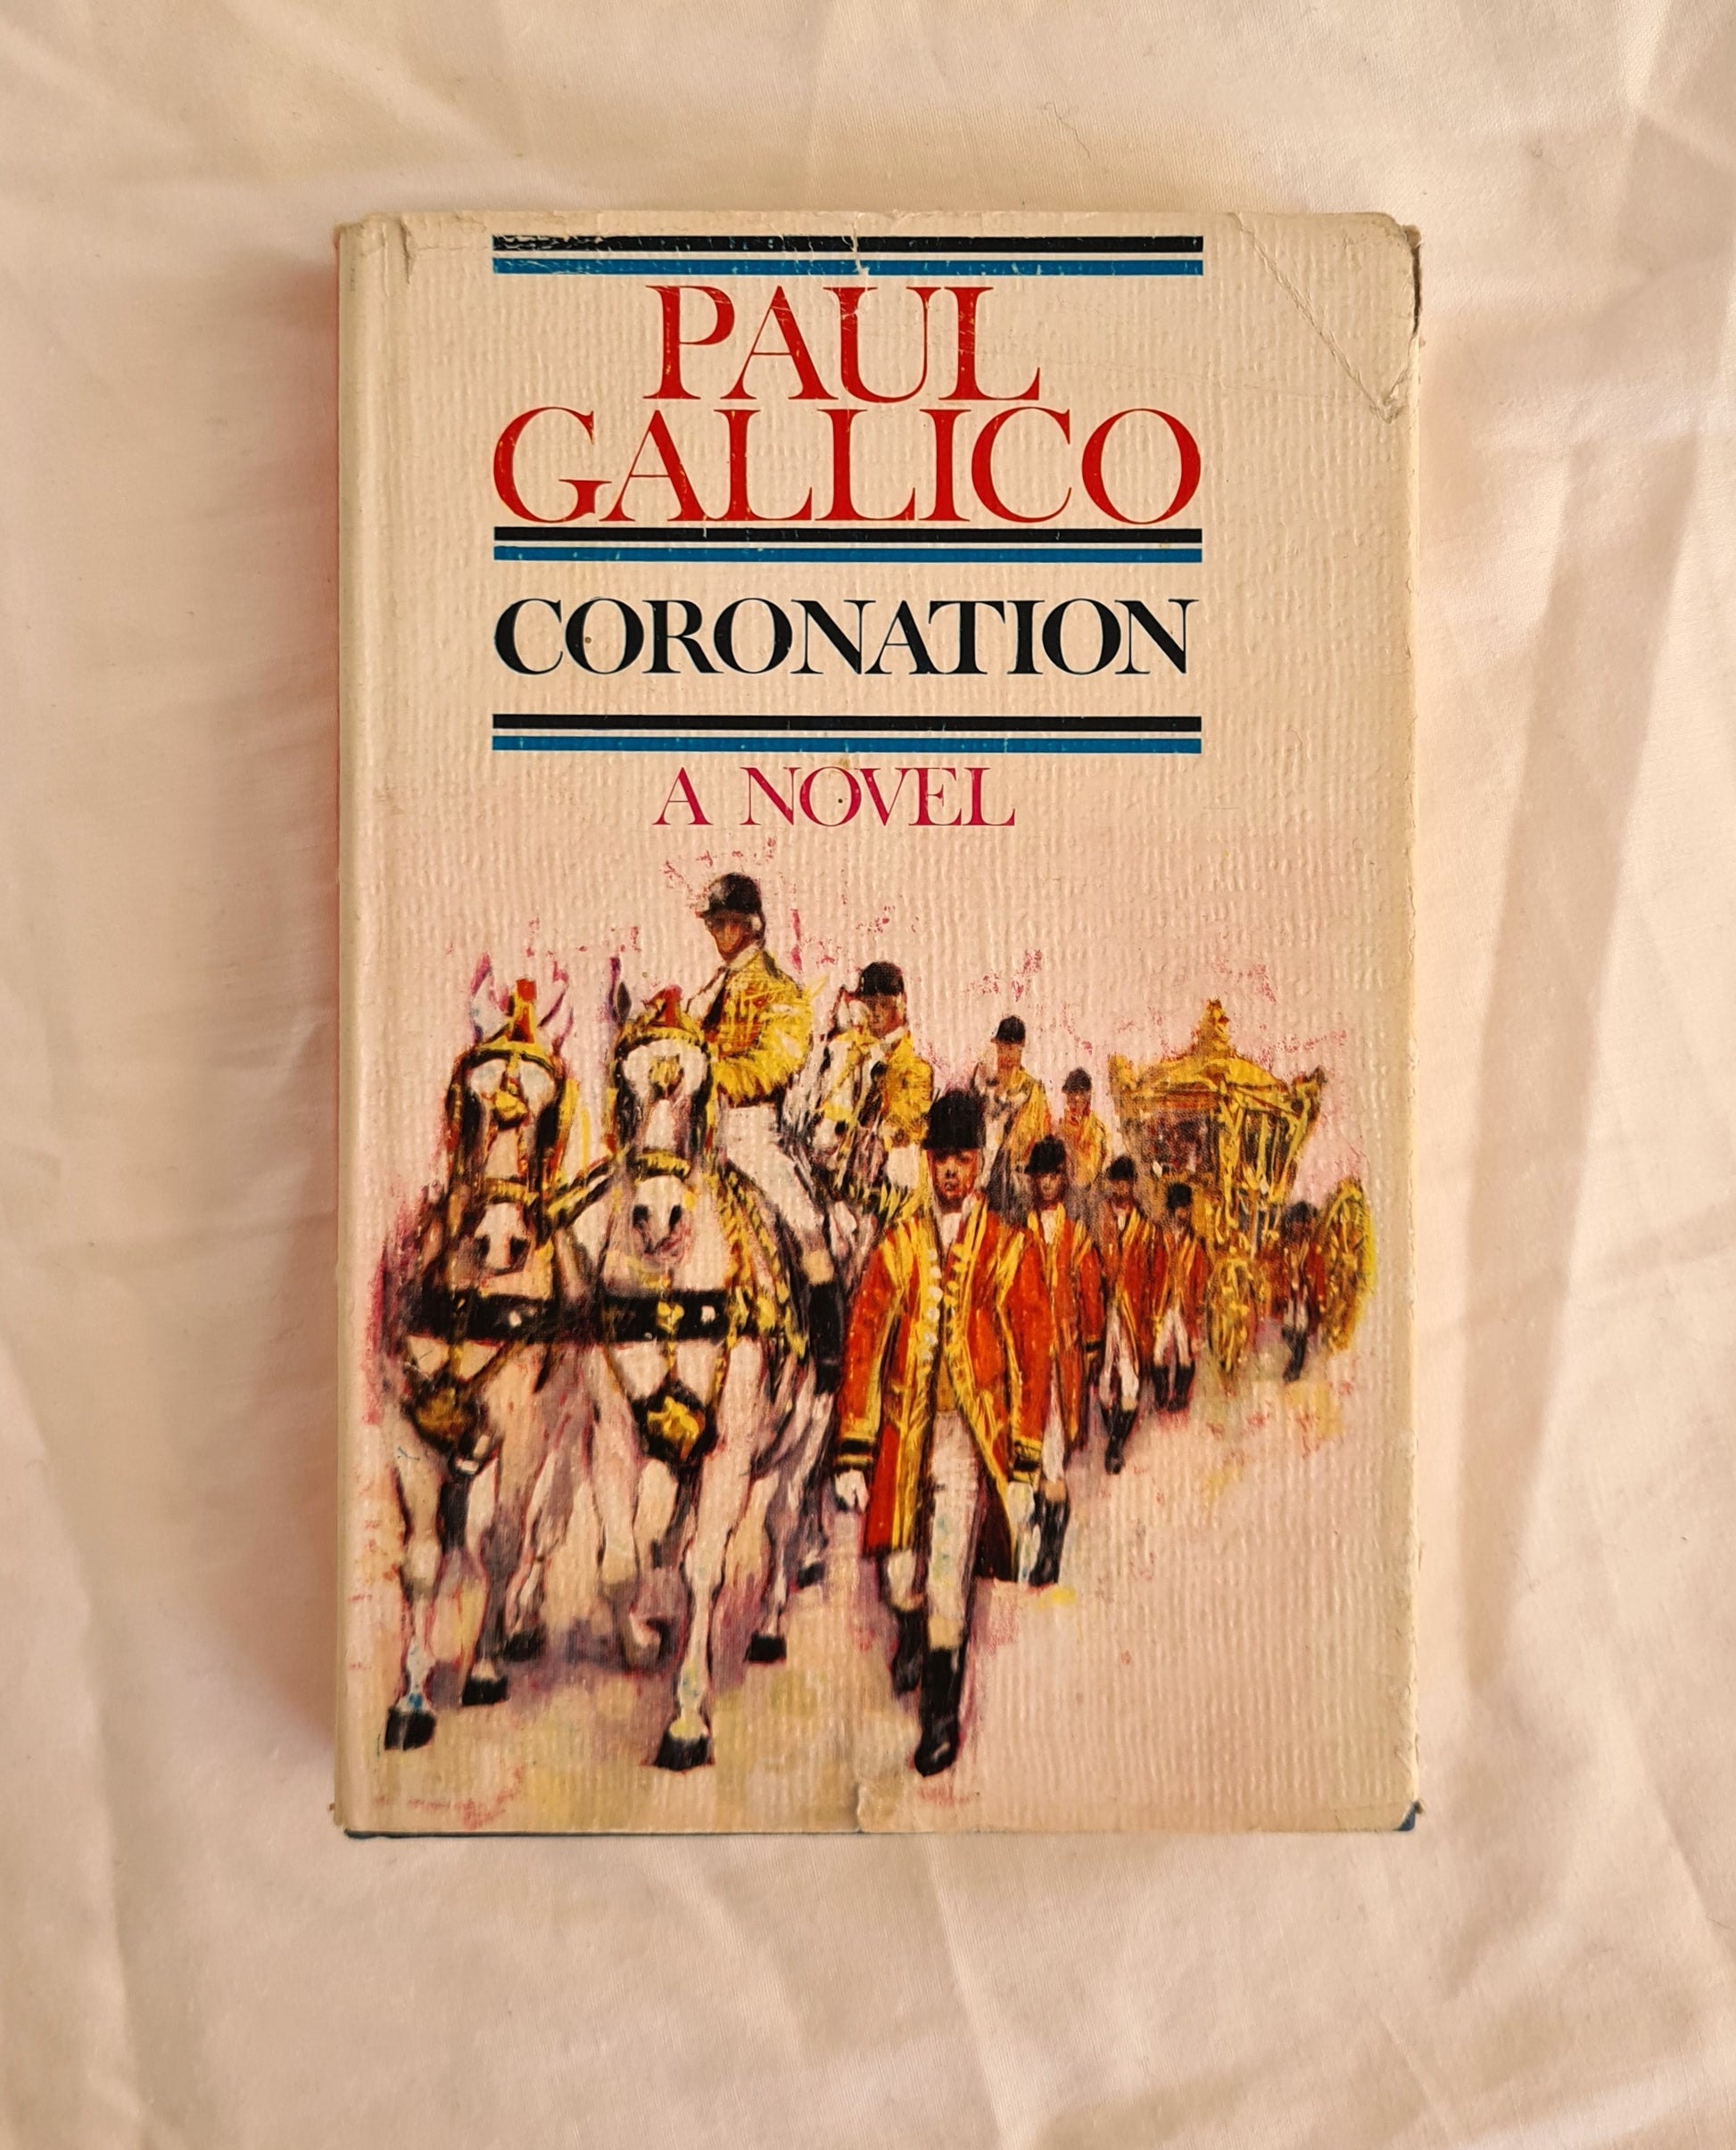 Coronation by Paul Gallico